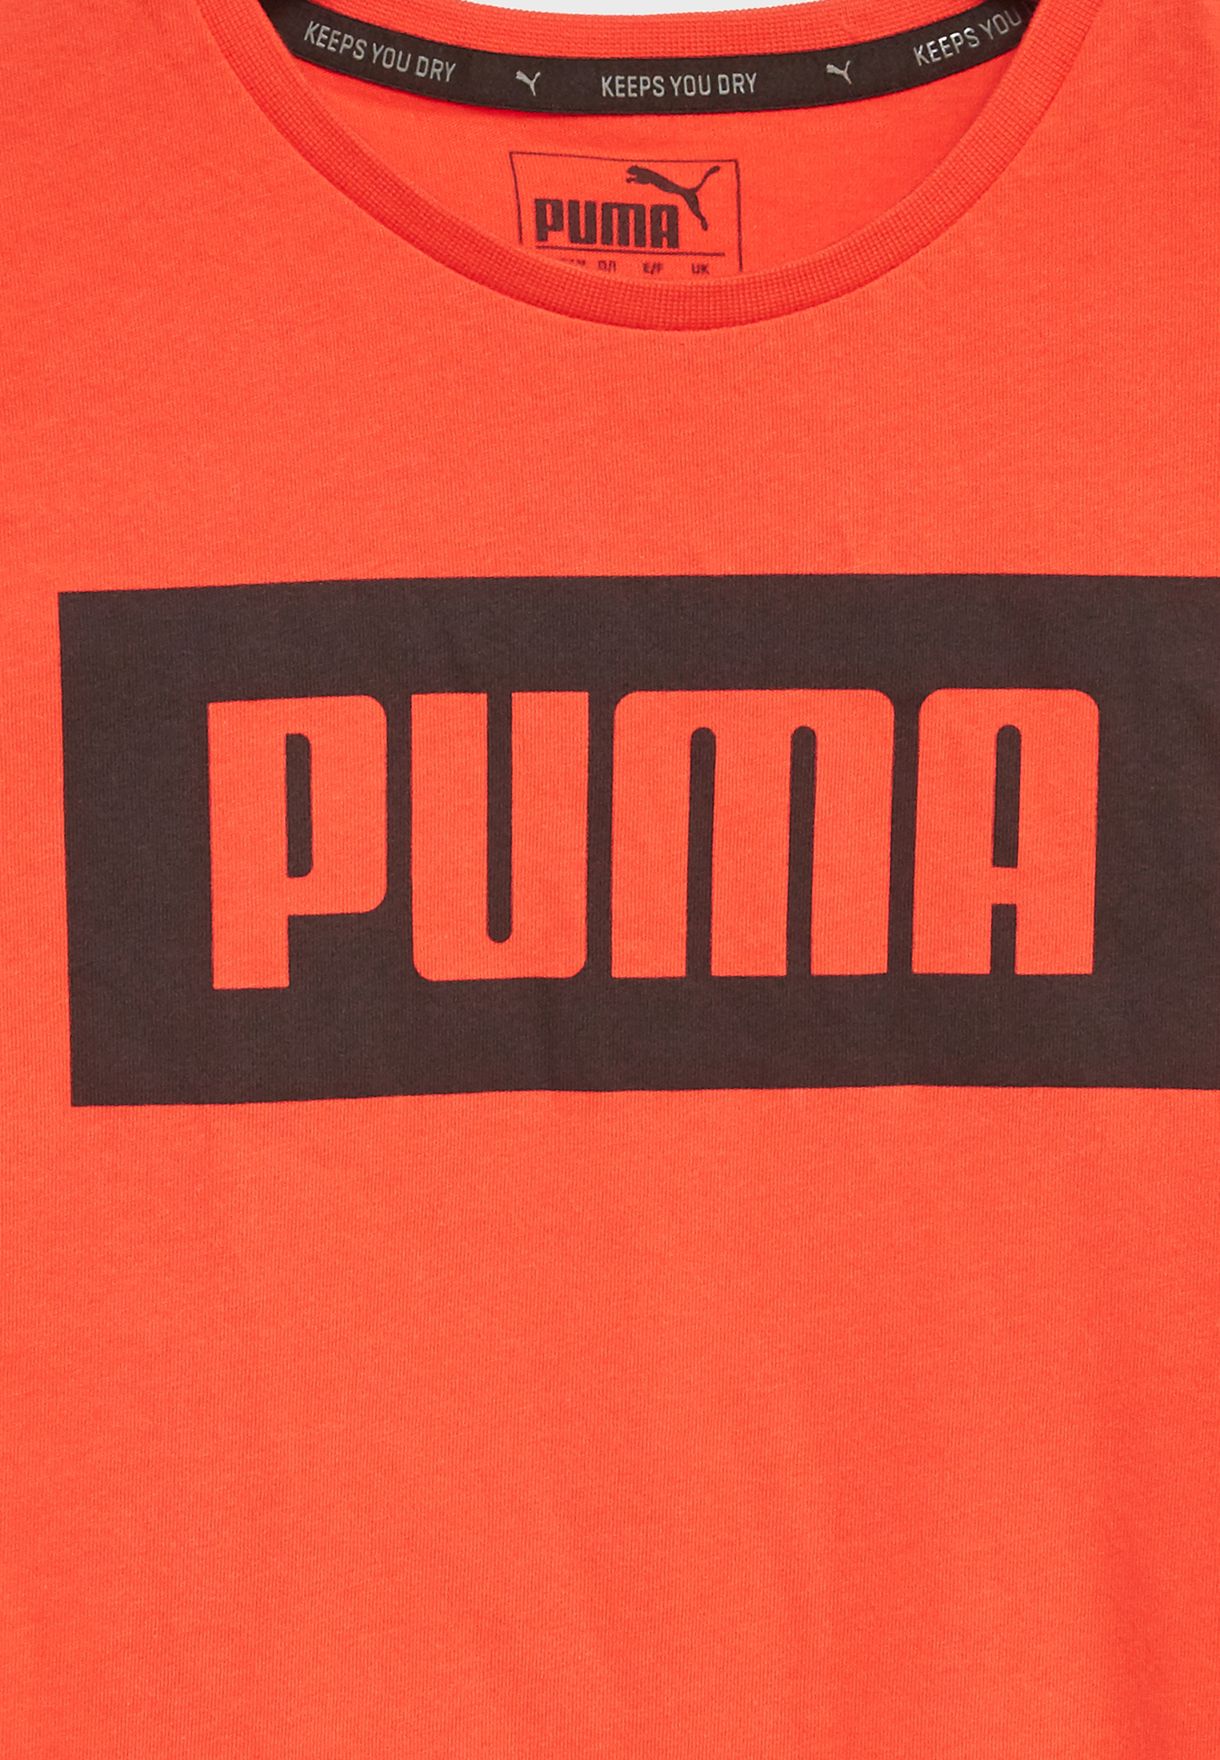 puma t shirt keeps you dry